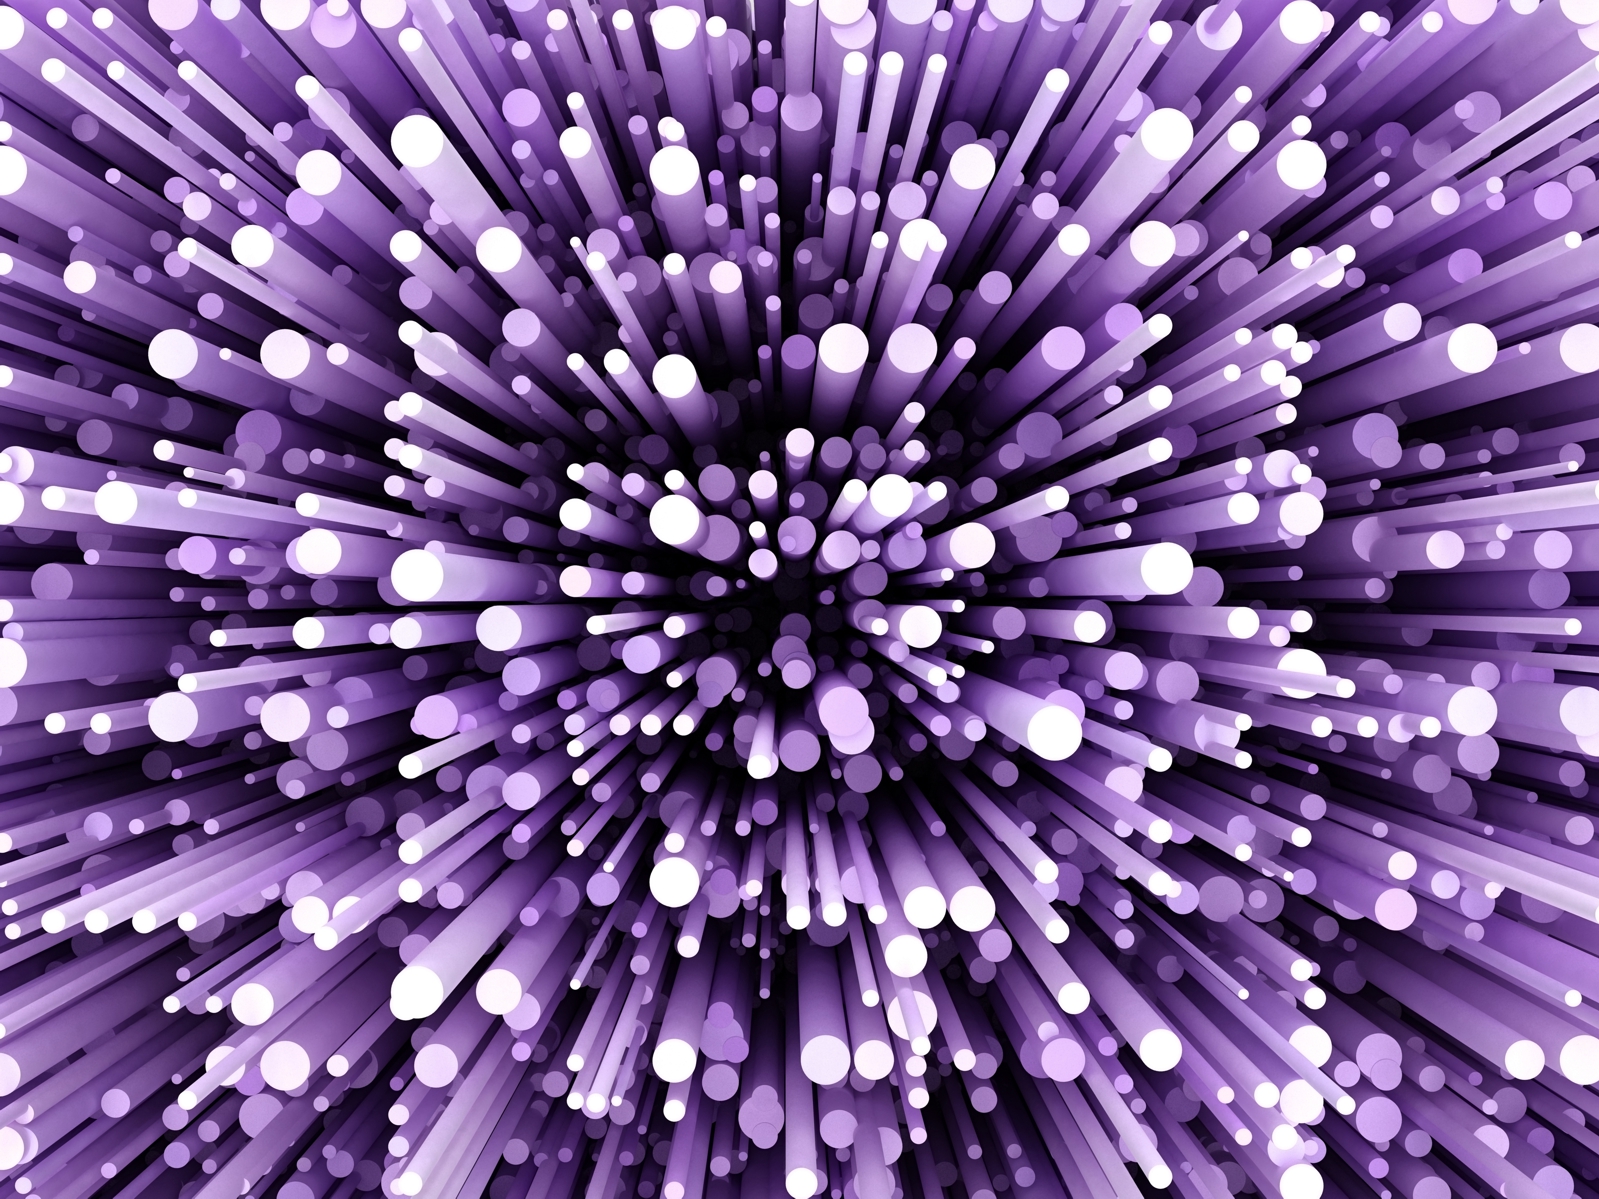 Vlies Tapete Poster XXL Fototapete 3D Effekt lila violett Space